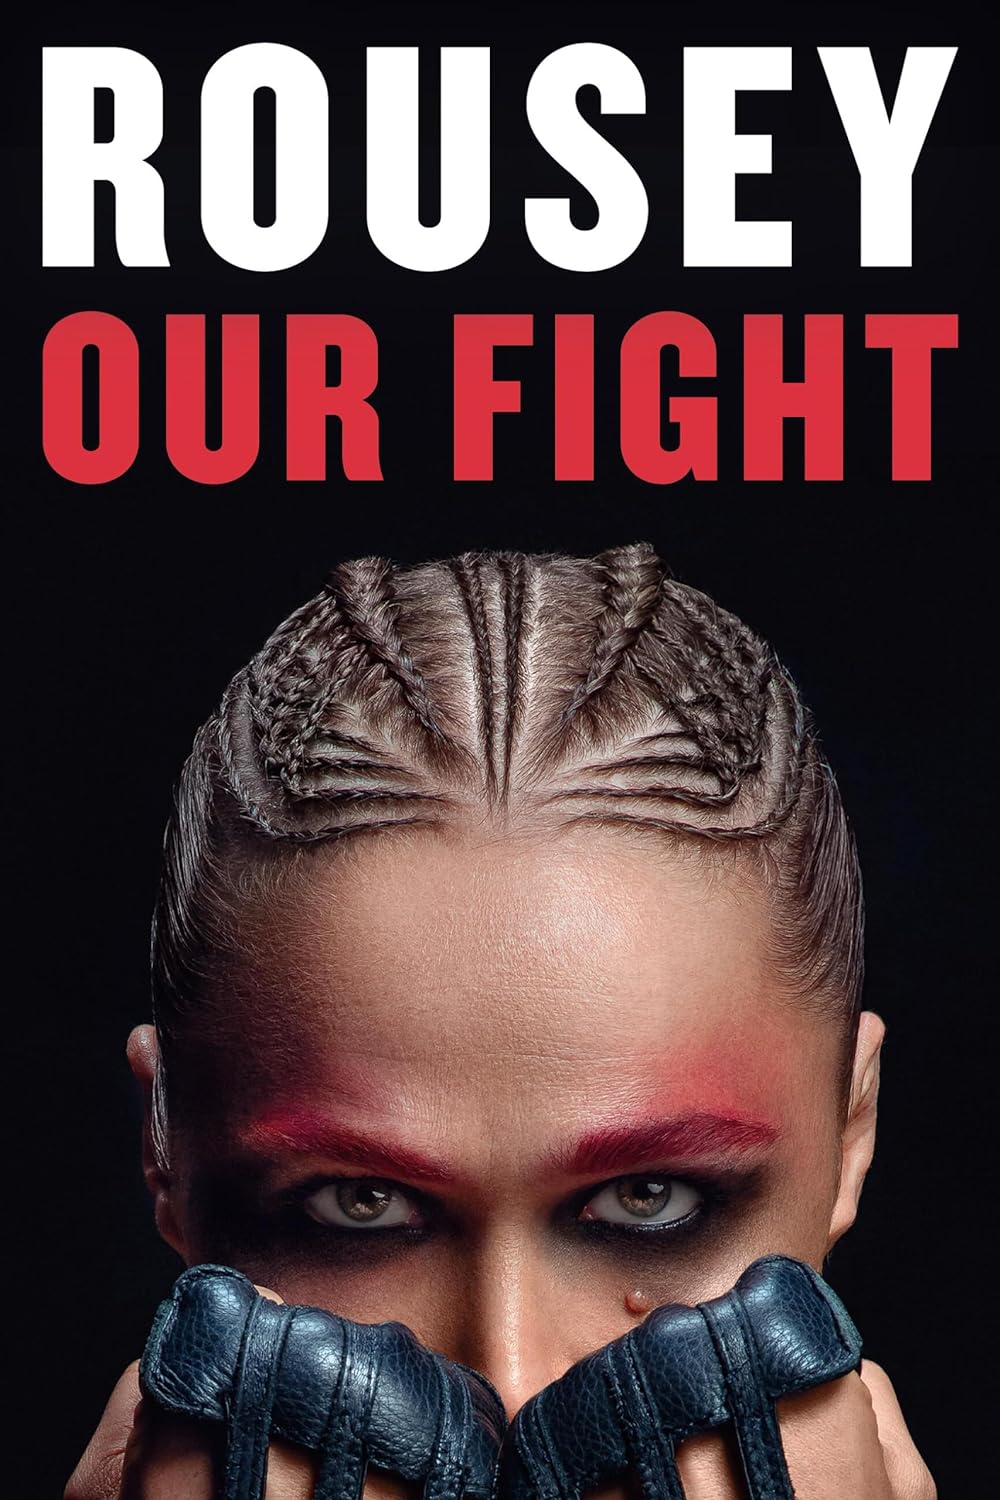 Ronda Rousey memoir Our Fight